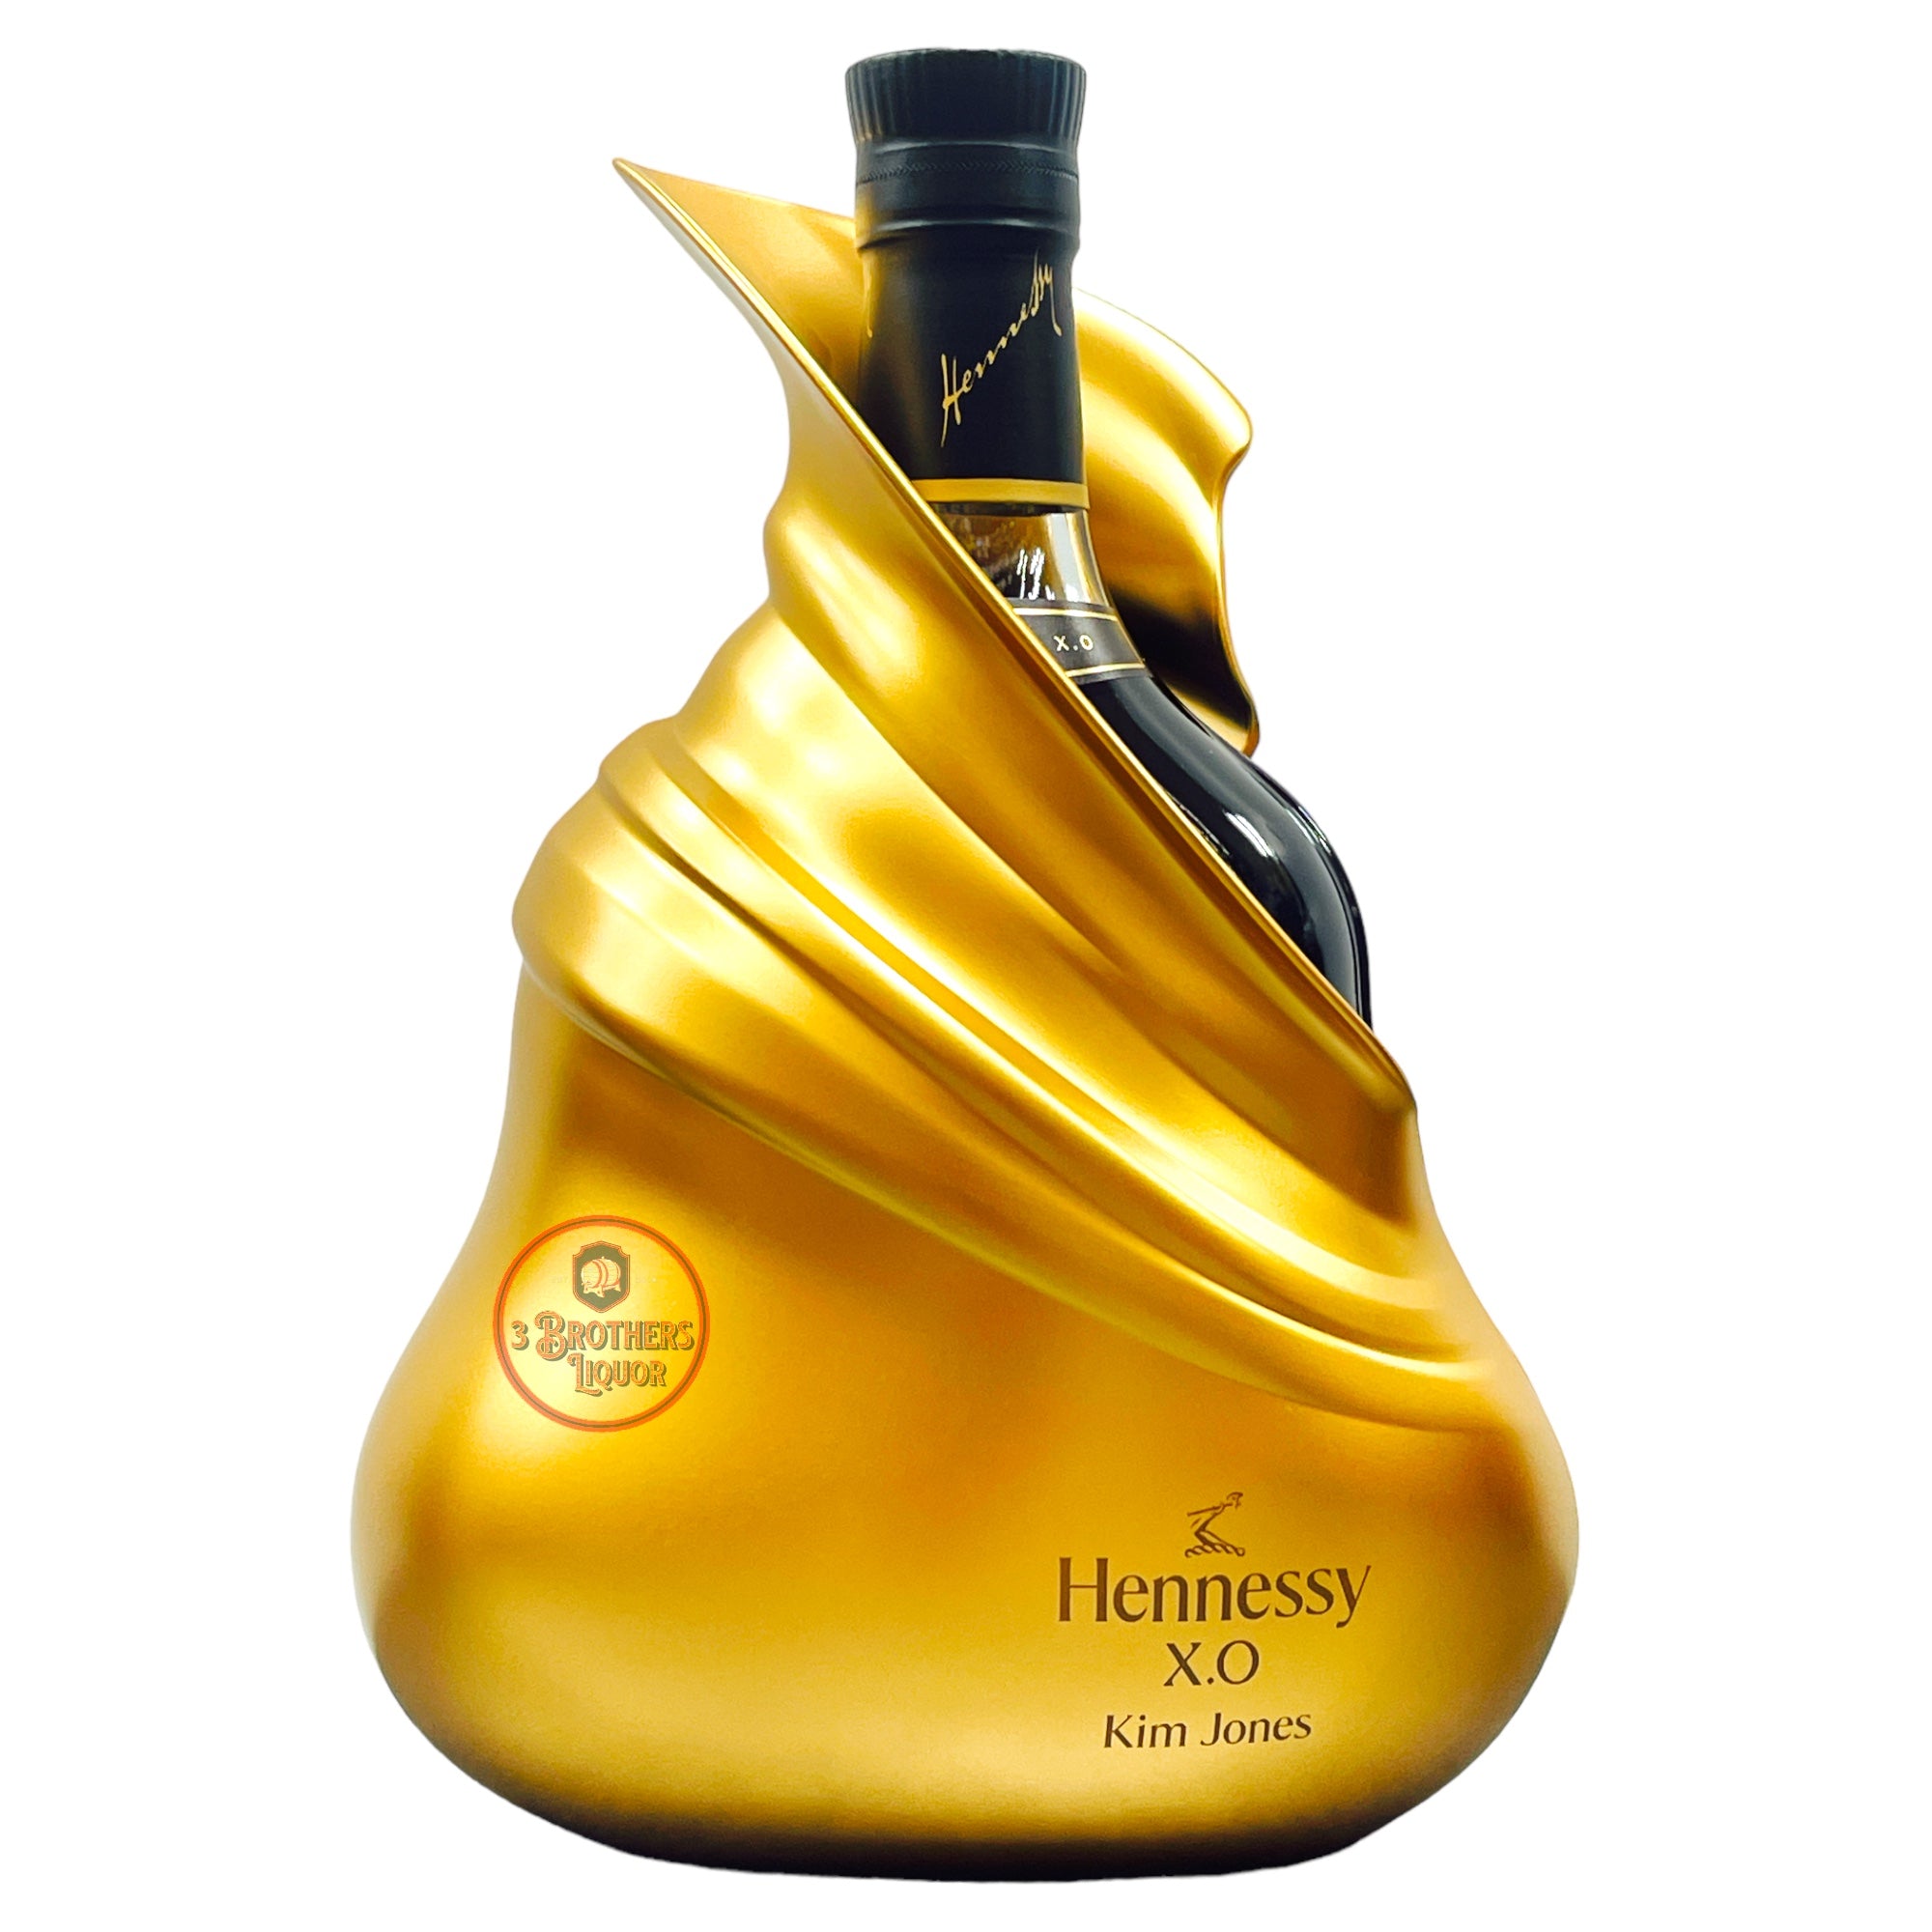 Hennessy XO Limited Edition by Kim Jones